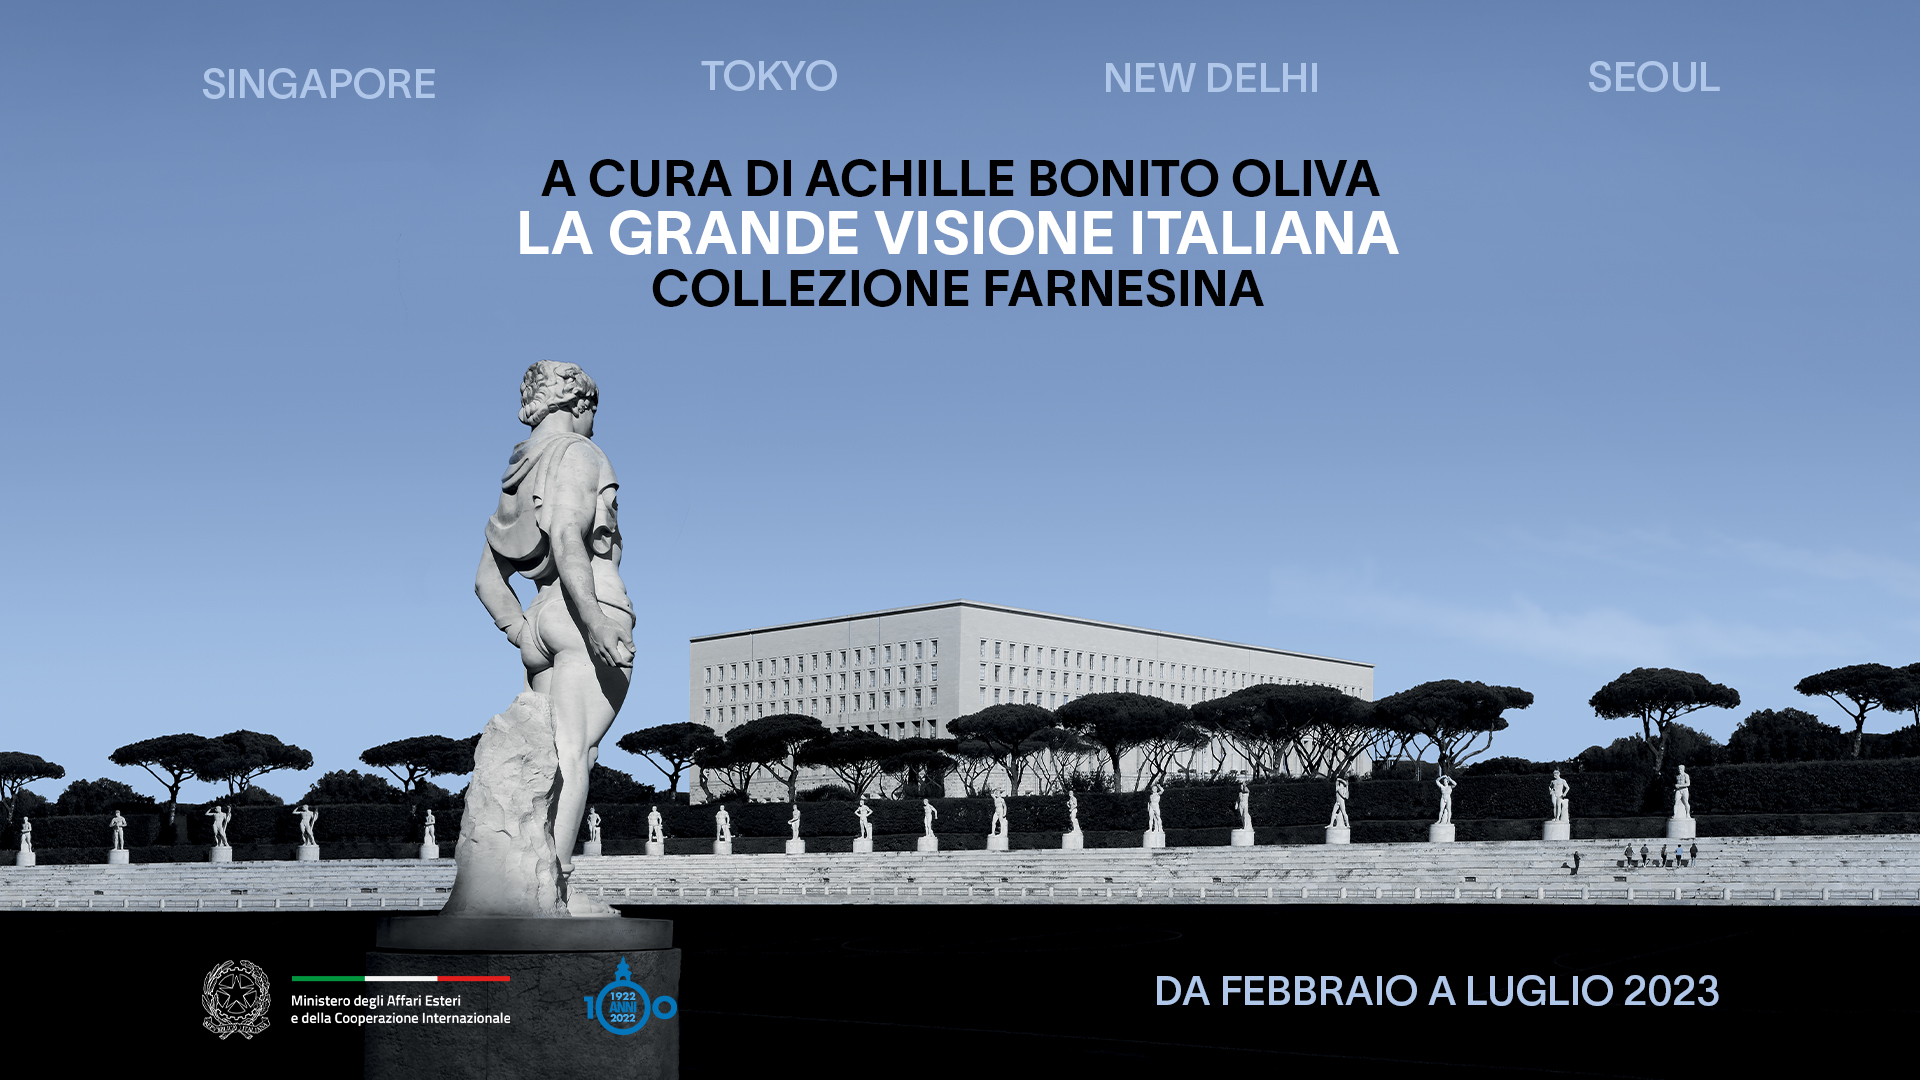 The Grand Italian Vision: The Farnesina Collection - Tokyo